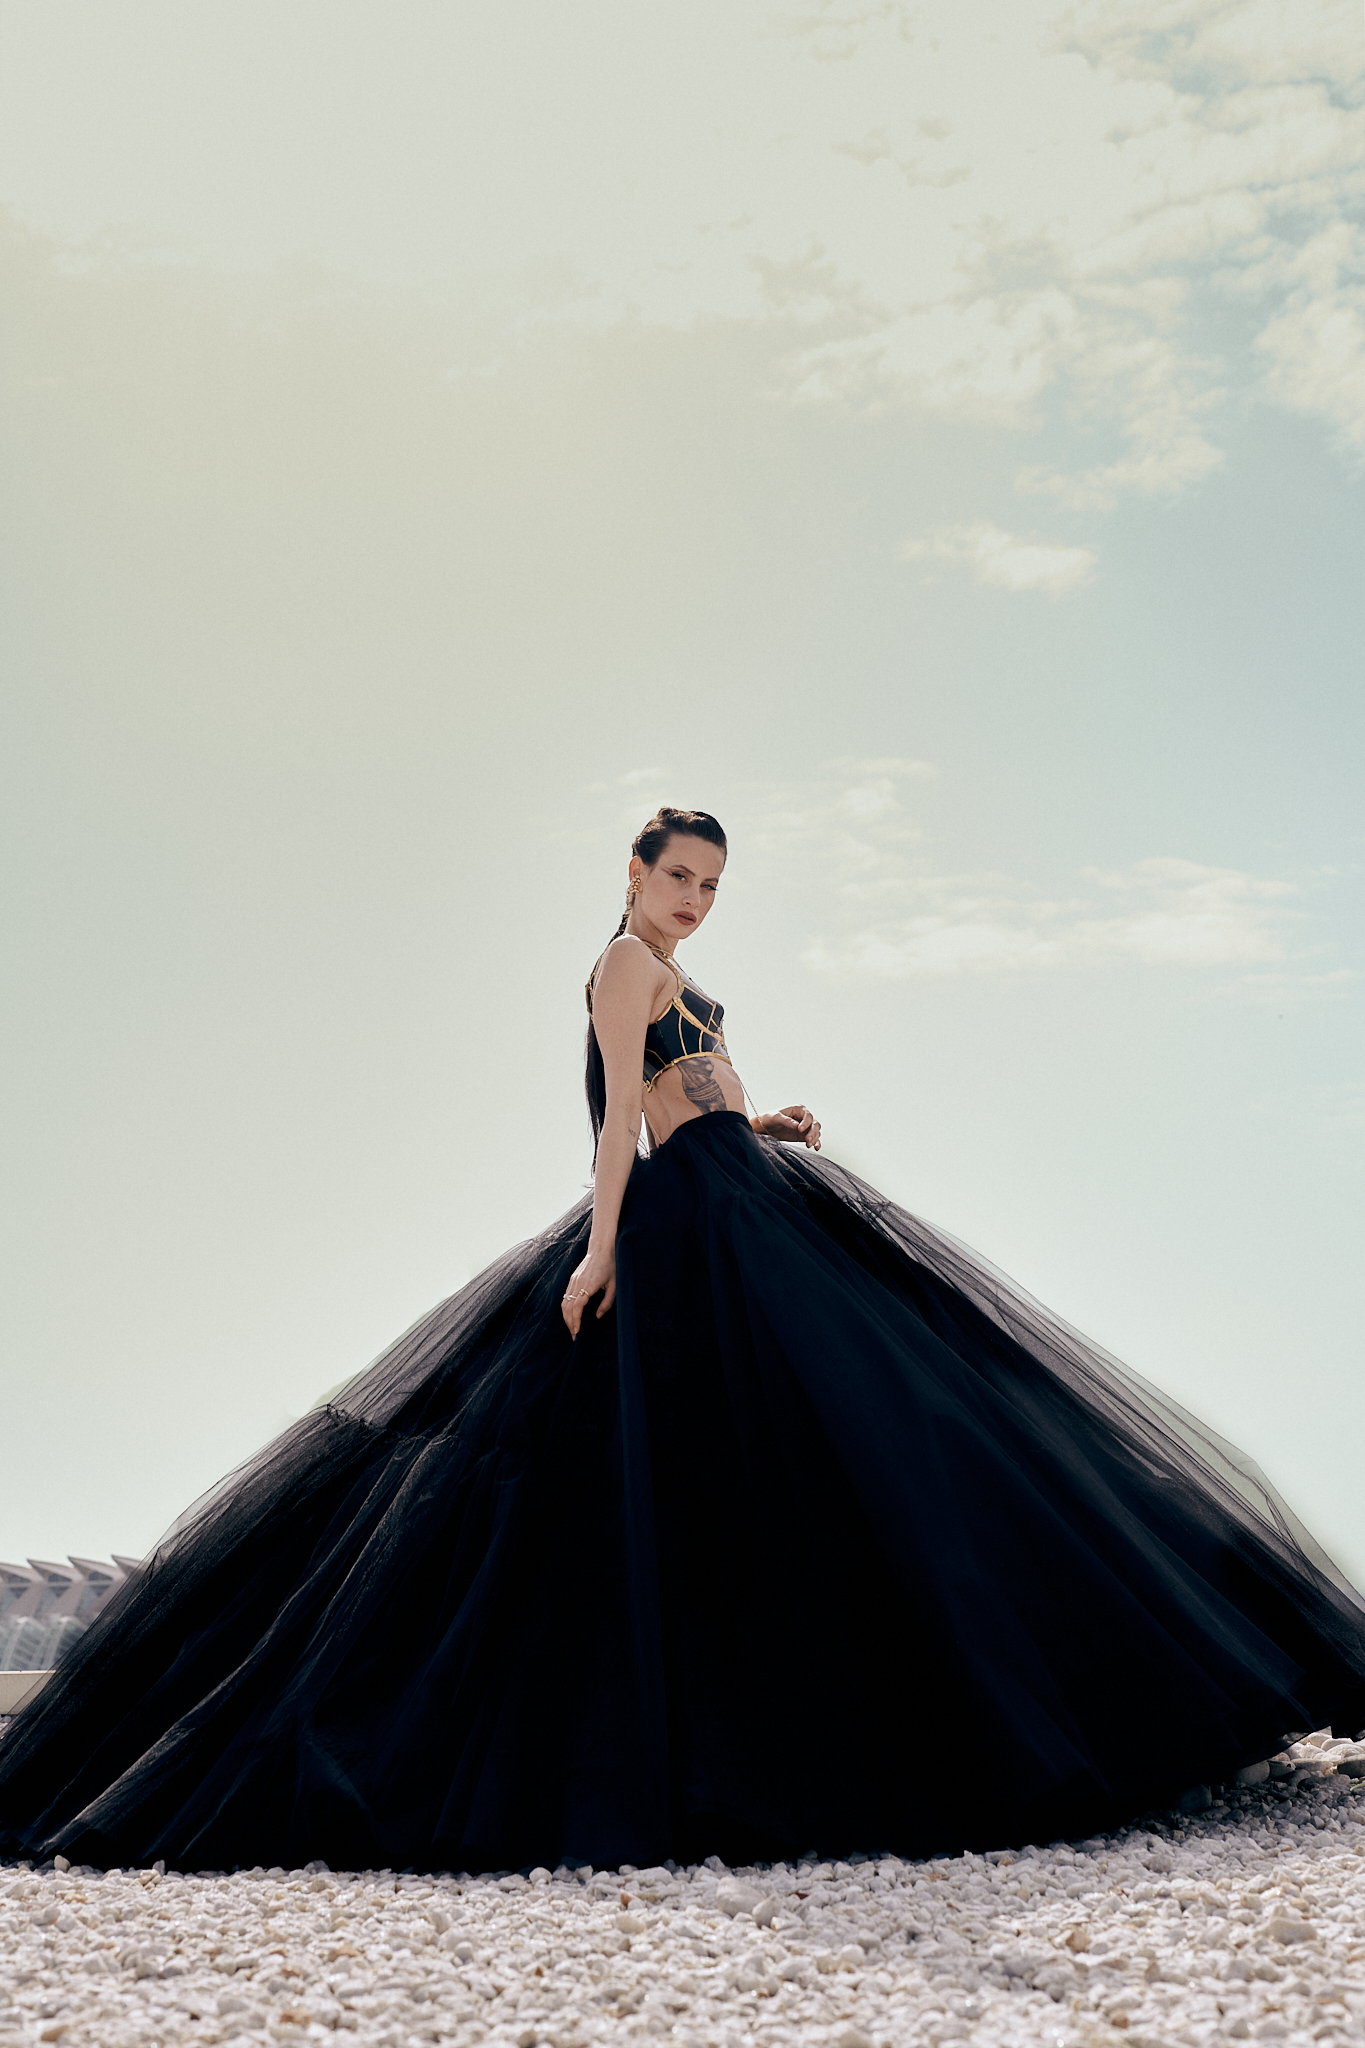 METCHA | Zendaya wears a bespoke Balmain leather gown for the Dune premiere